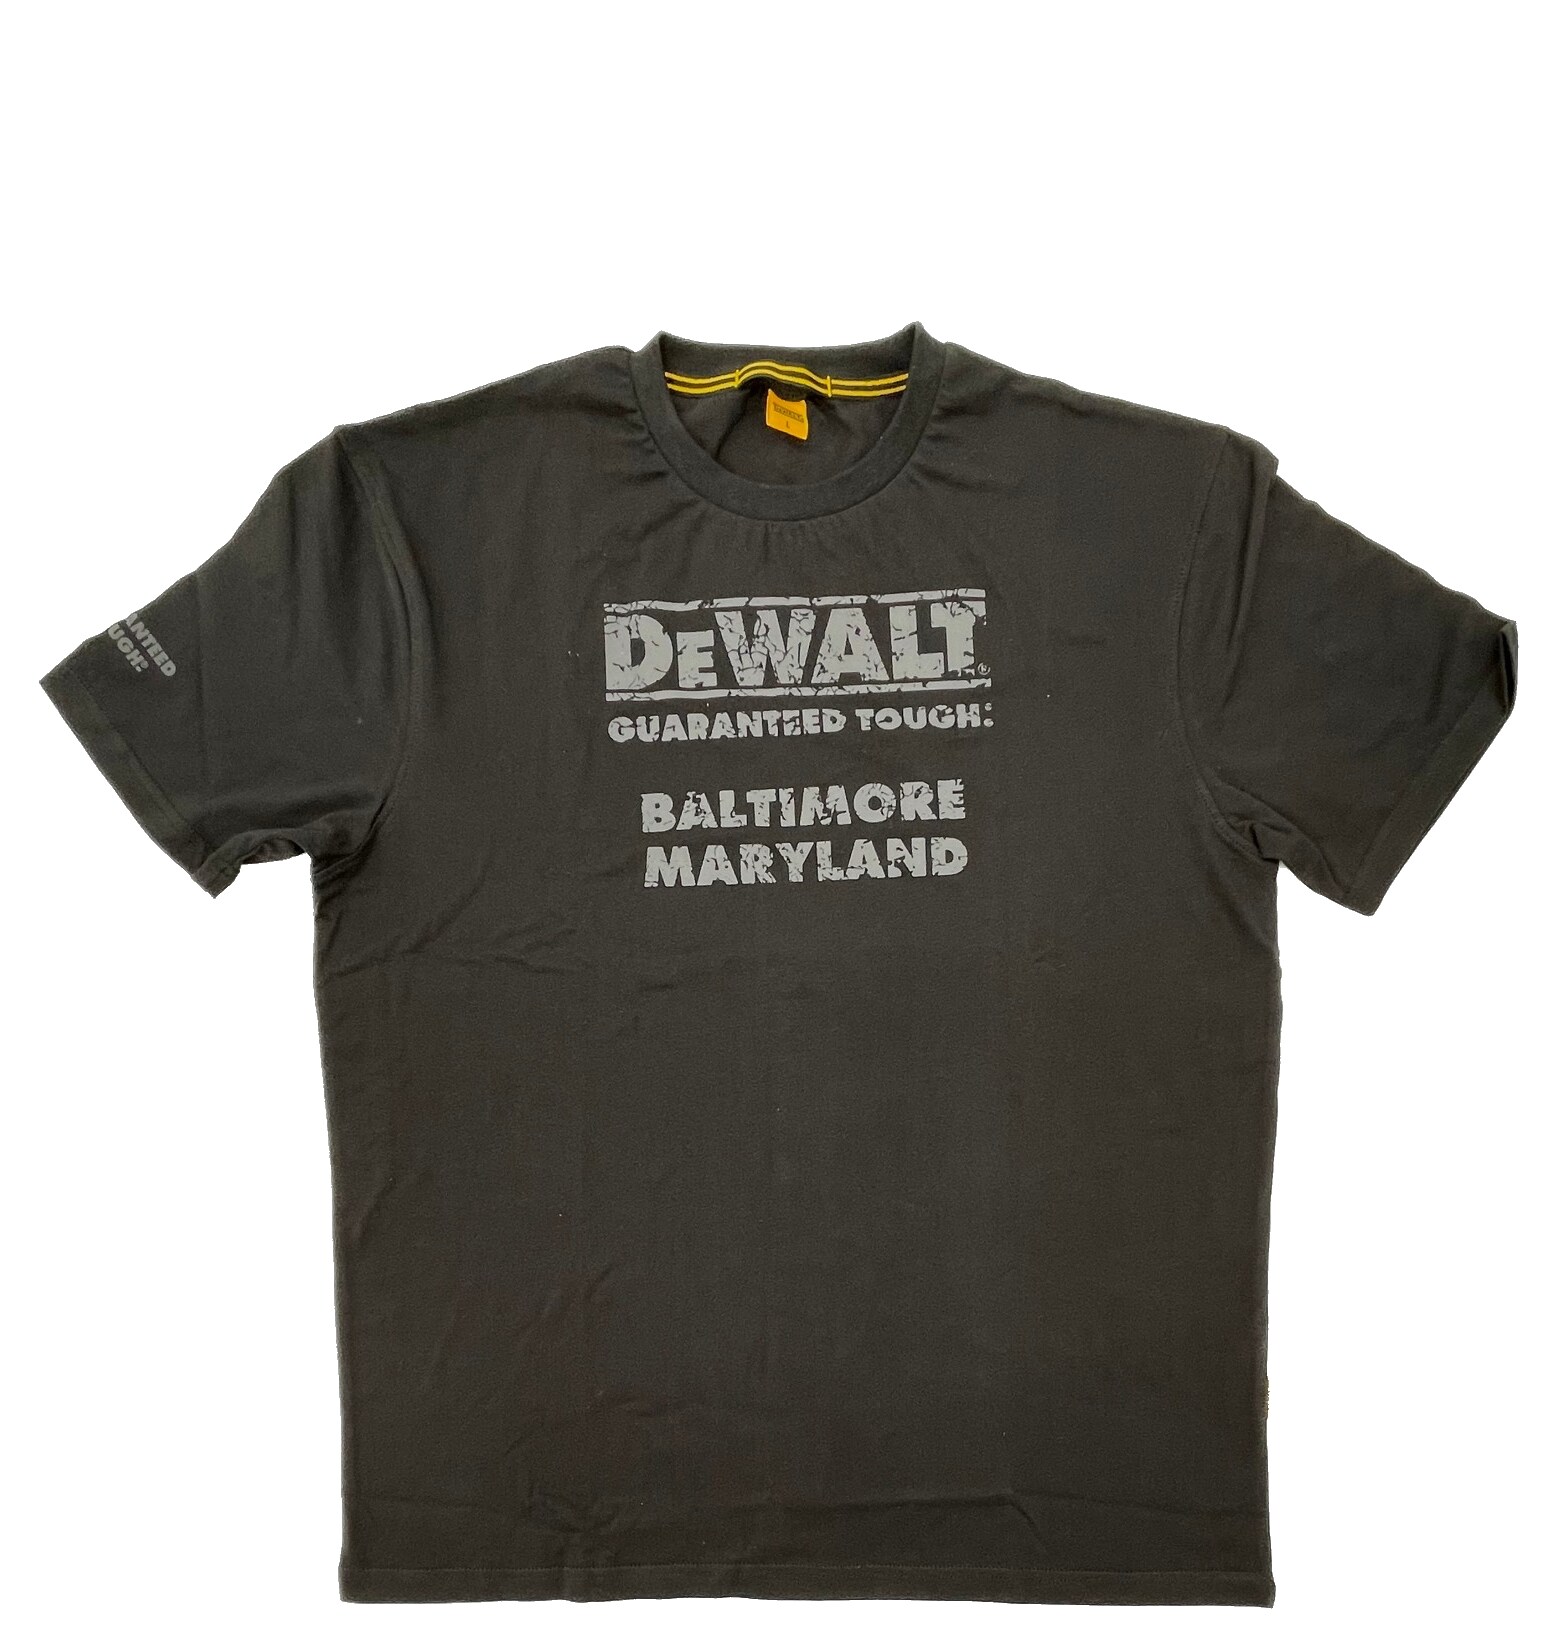 DEWALT Work Shirts at Lowes.com